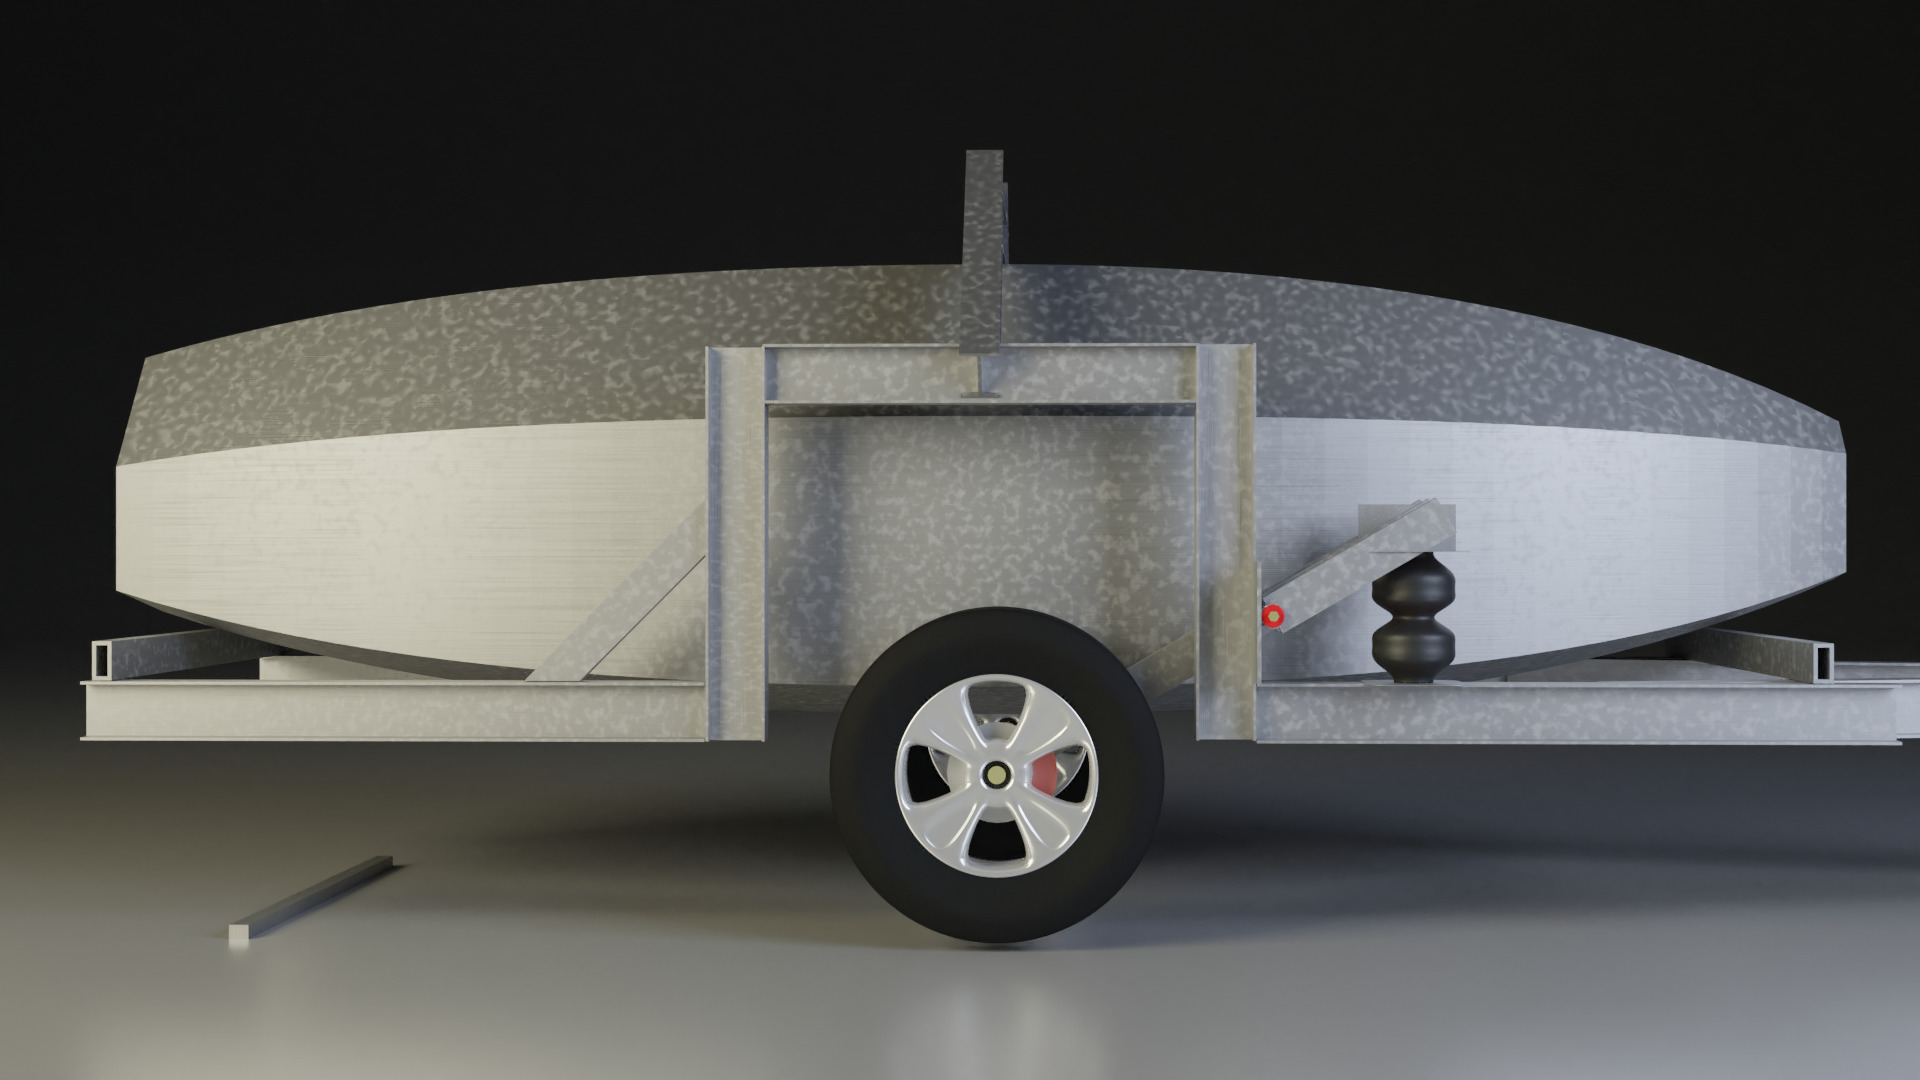 2021_08_29_airbagged_trailer0001.jpg